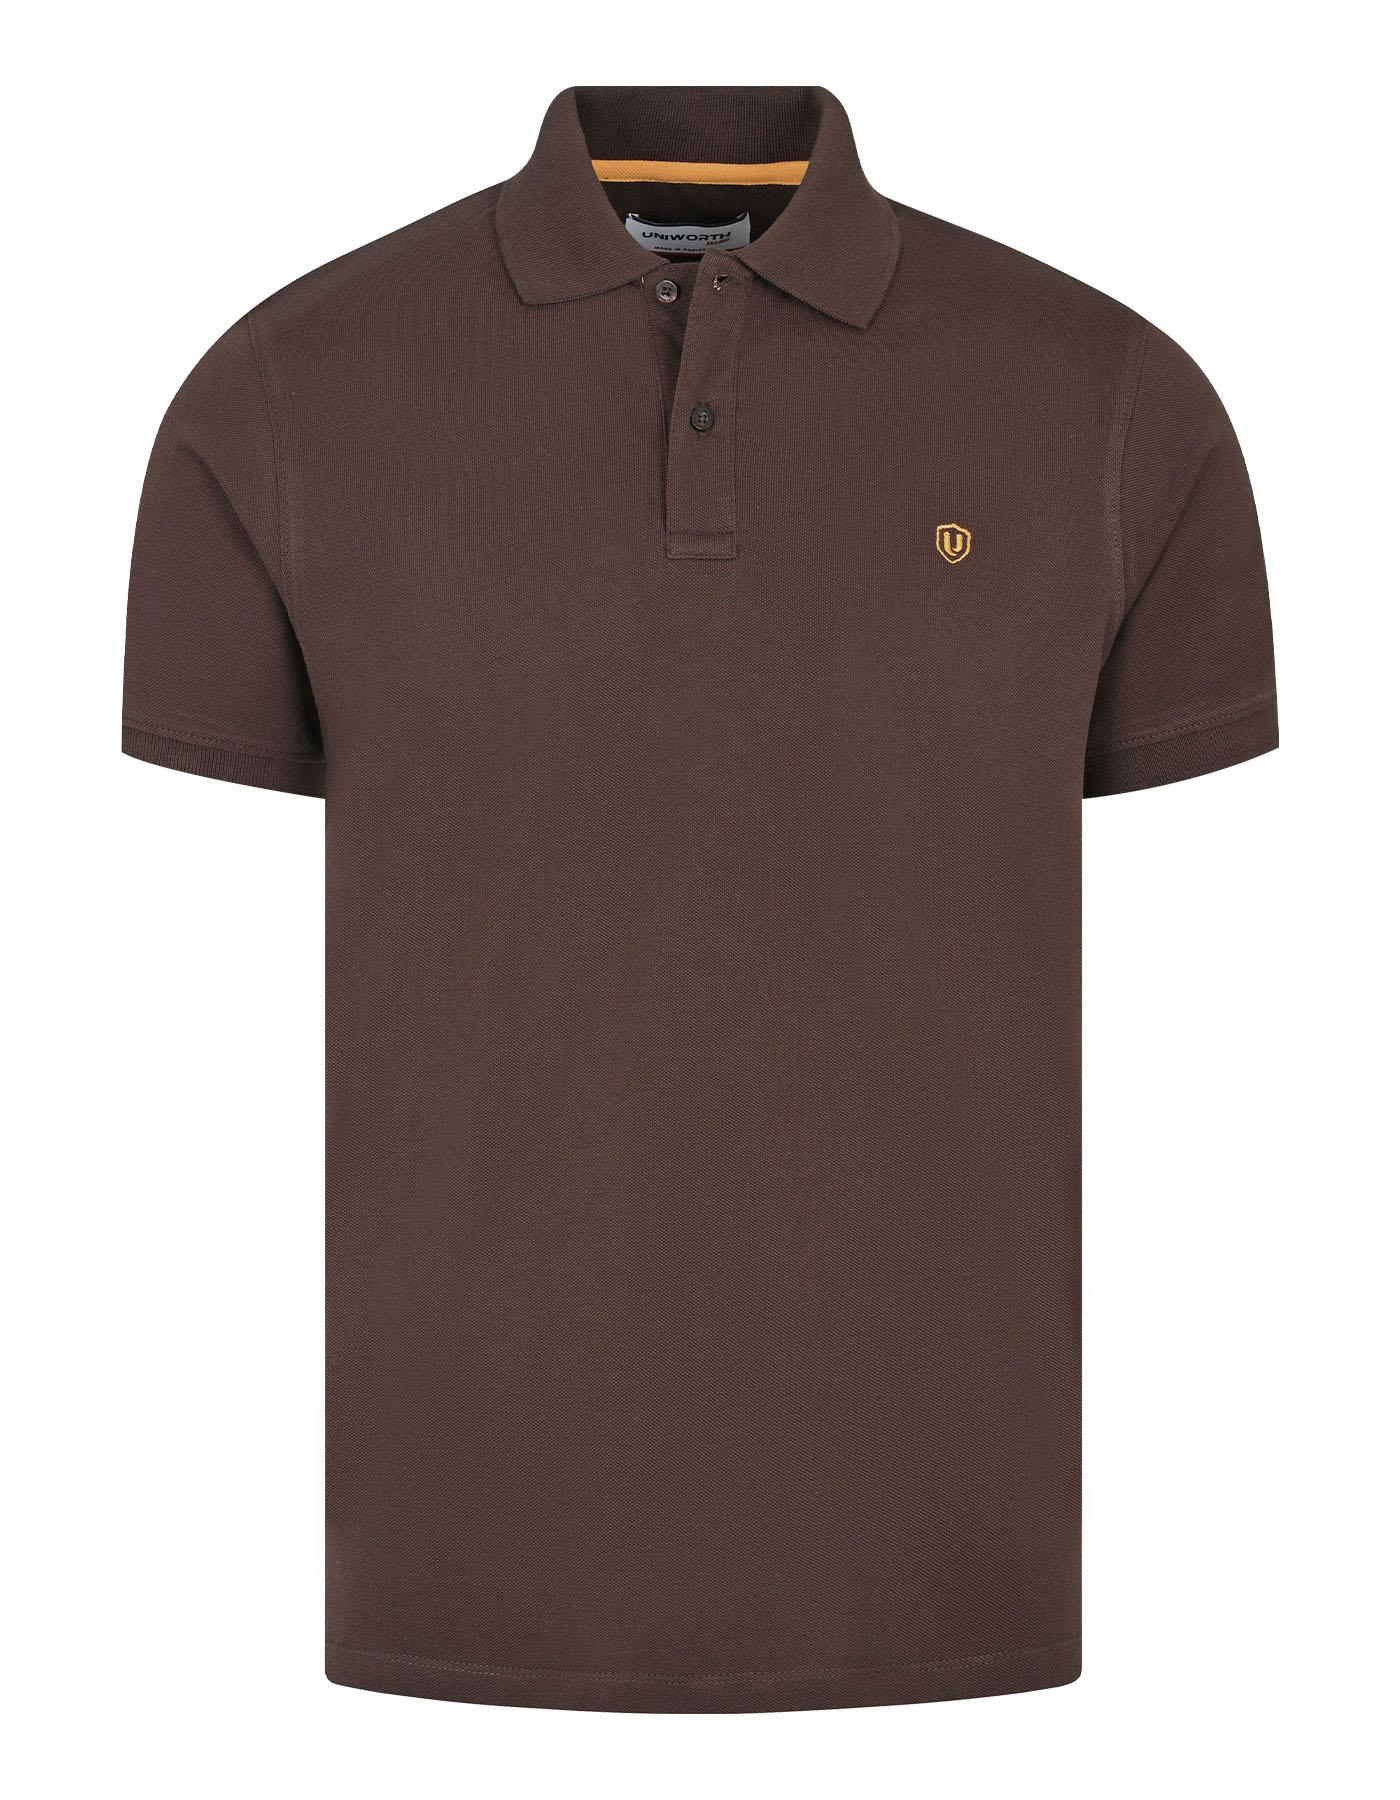 Brown Cotton Polo Shirt For Men|Uniworth